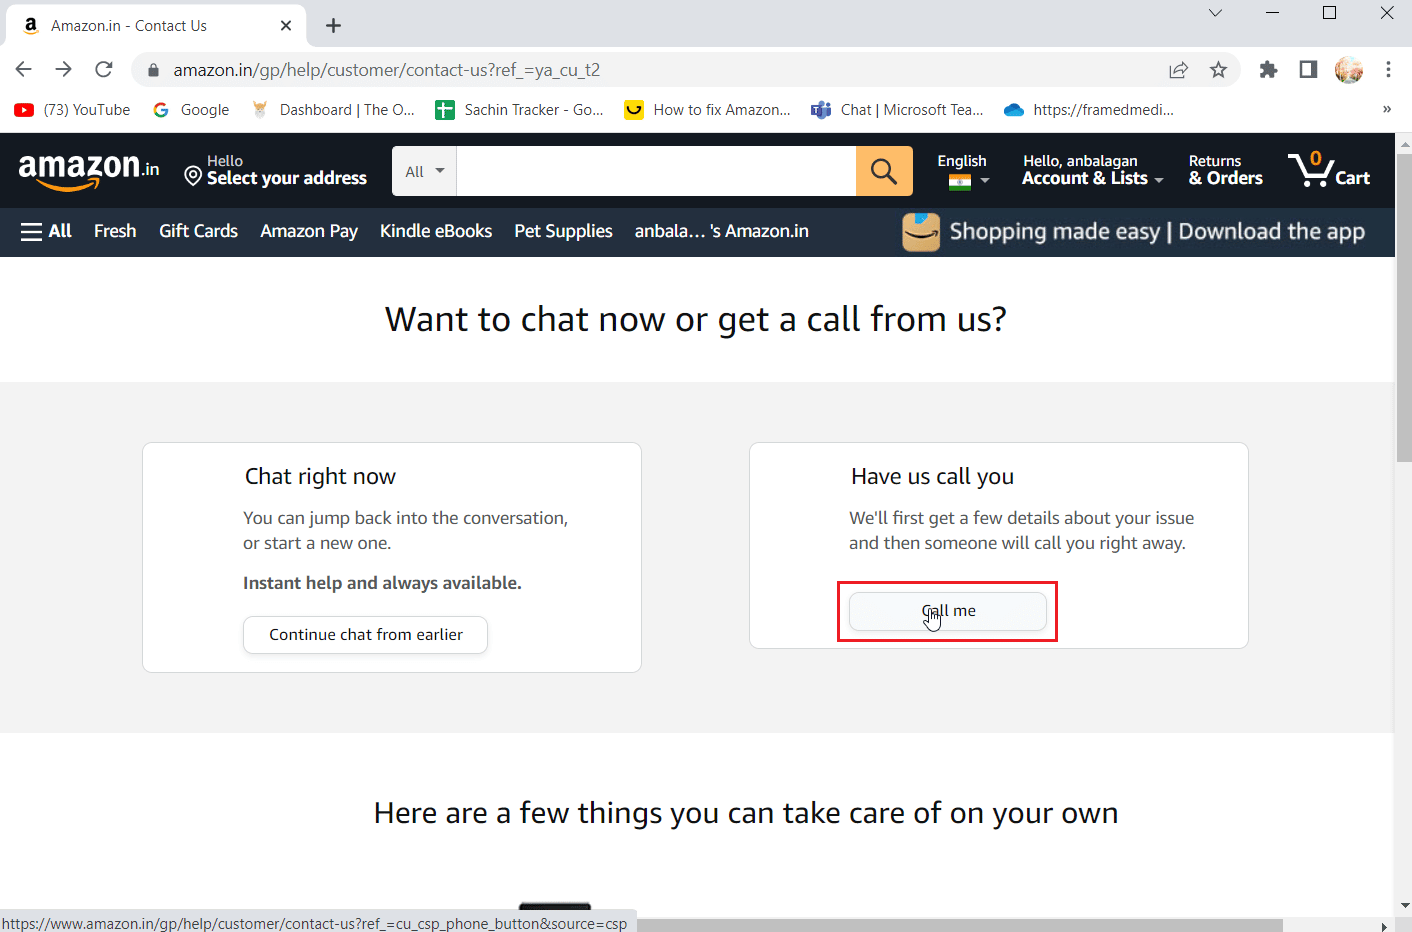 click on call me option